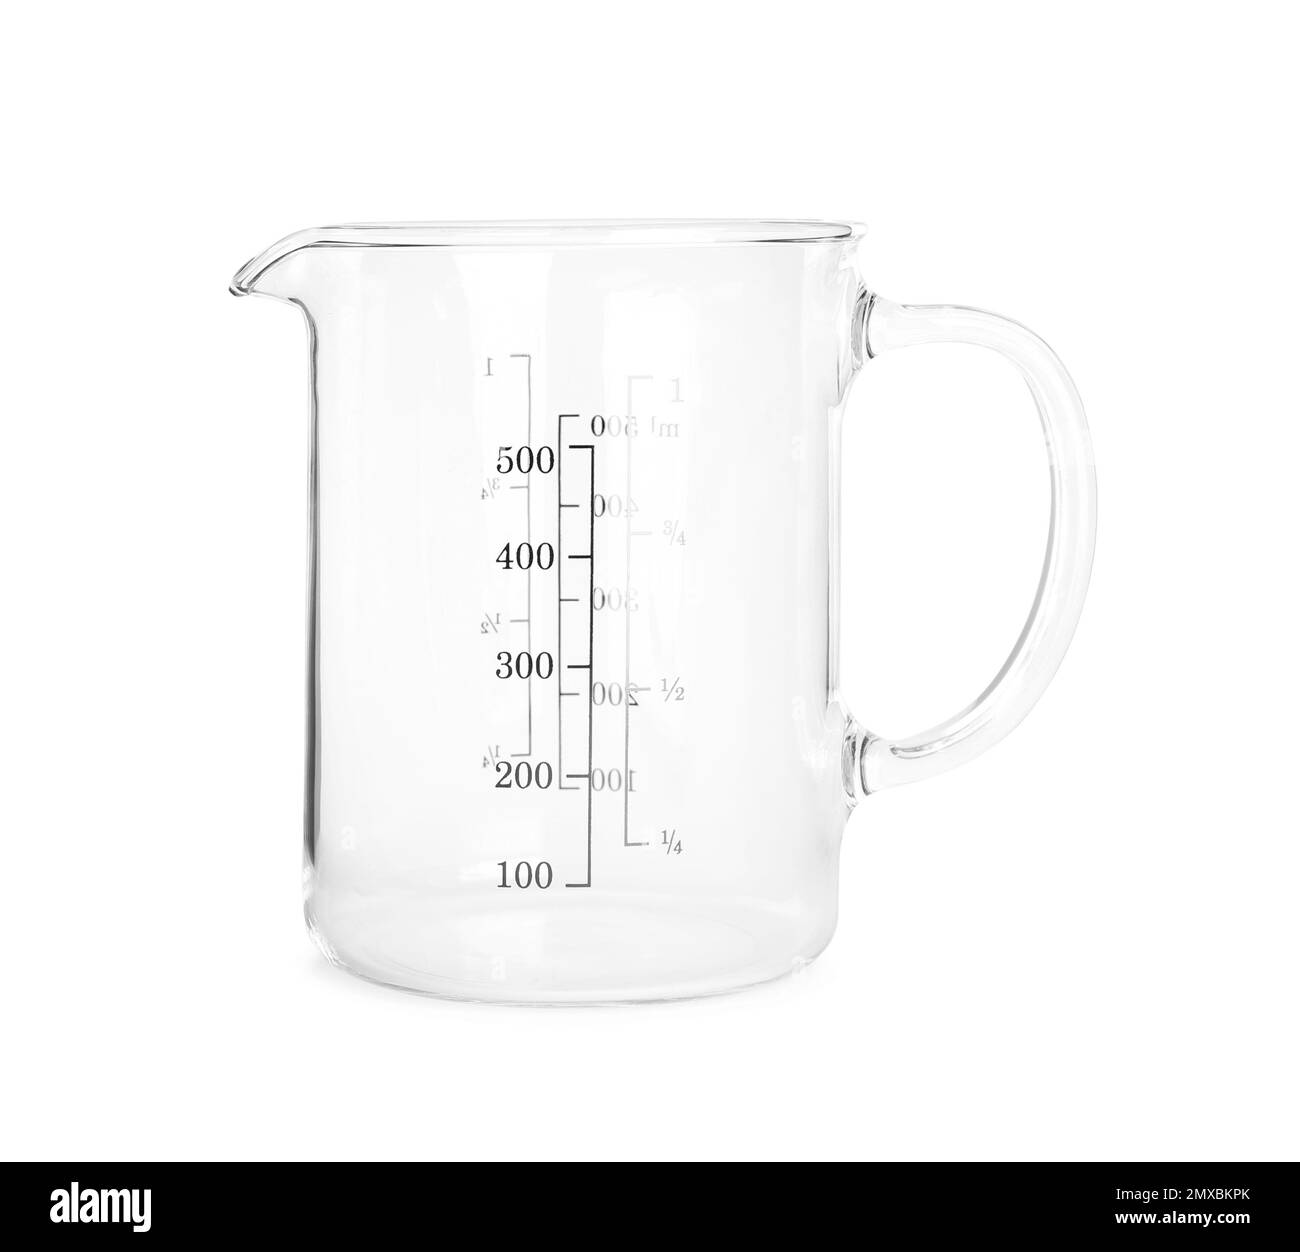 https://c8.alamy.com/comp/2MXBKPK/new-transparent-measuring-cup-isolated-on-white-cooking-utensil-2MXBKPK.jpg